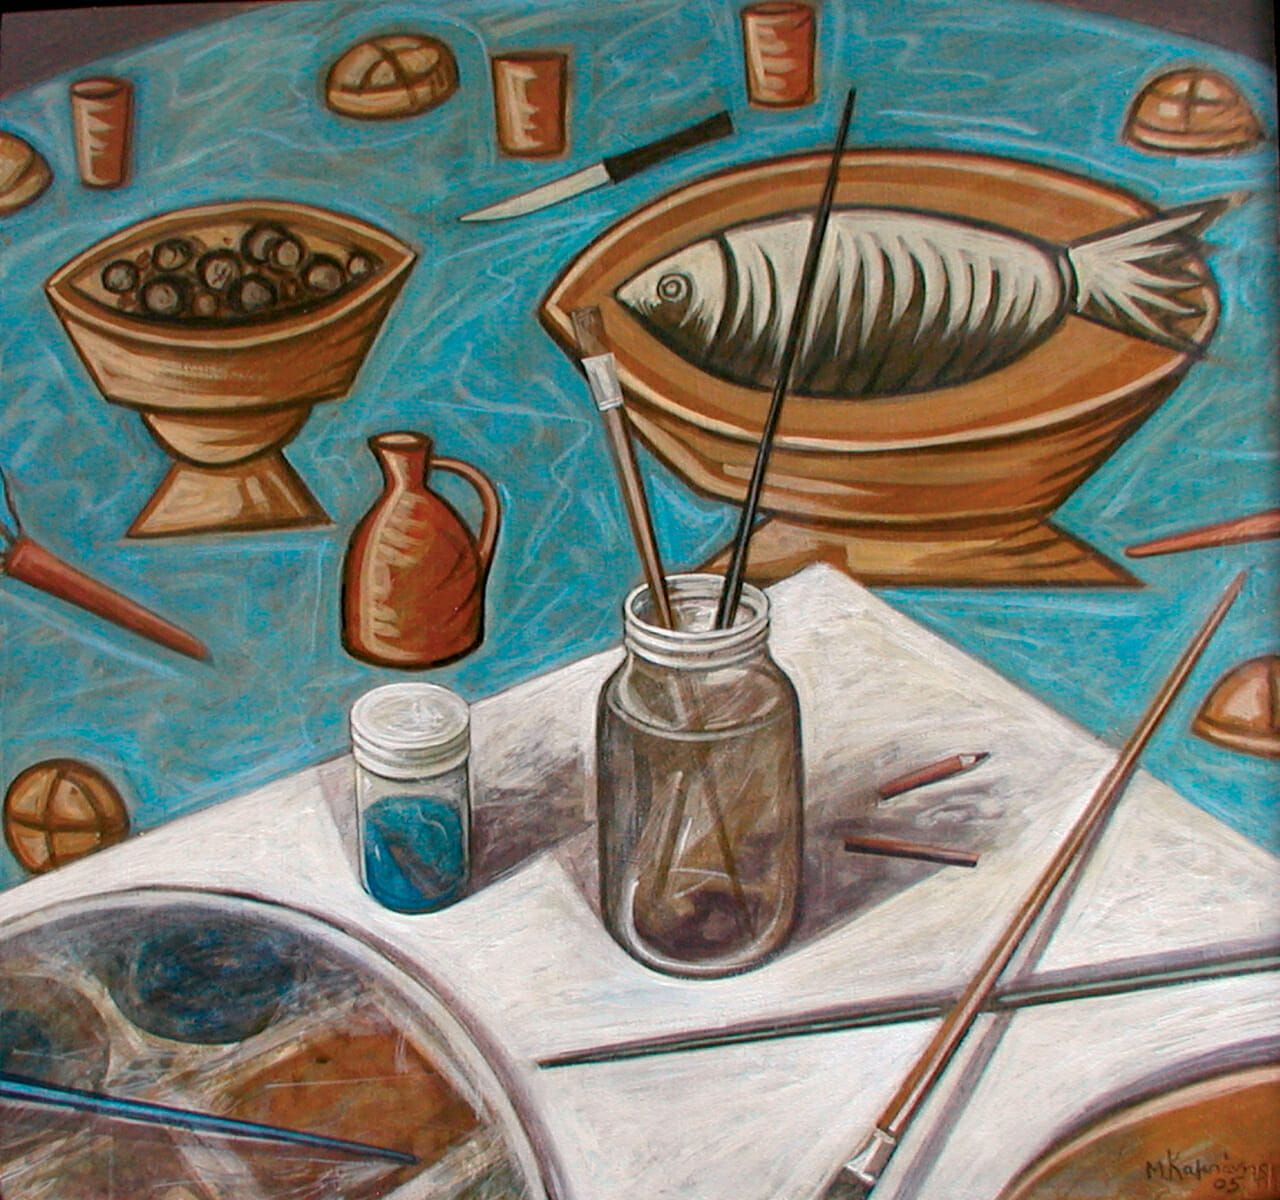 Markos Kampanis, The Last Supper Table, 2005. Acrylic on wood, 42 x 45 cm.